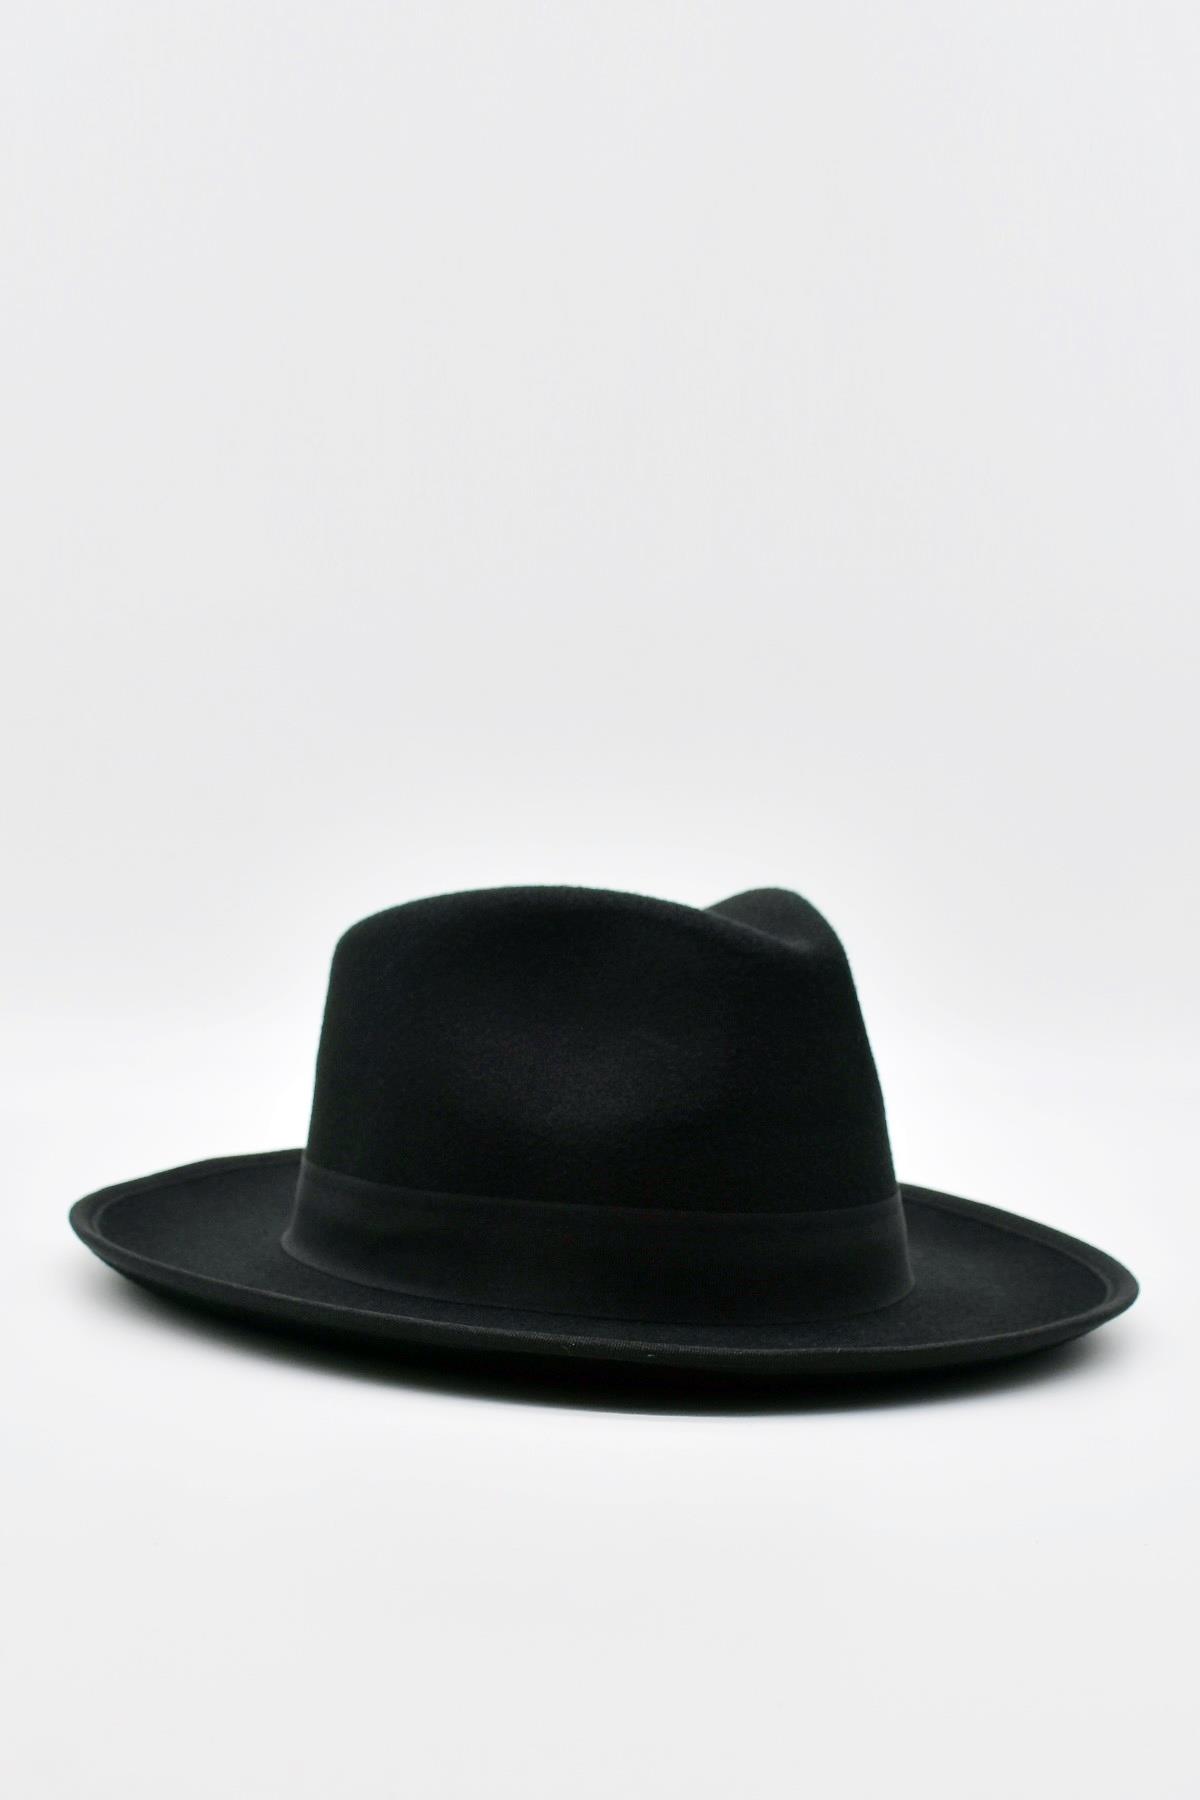 Külah Vintage Erkek Fedora Fötr Şapka Panama İngiliz Trilby Kasket Siyah  KLH7375